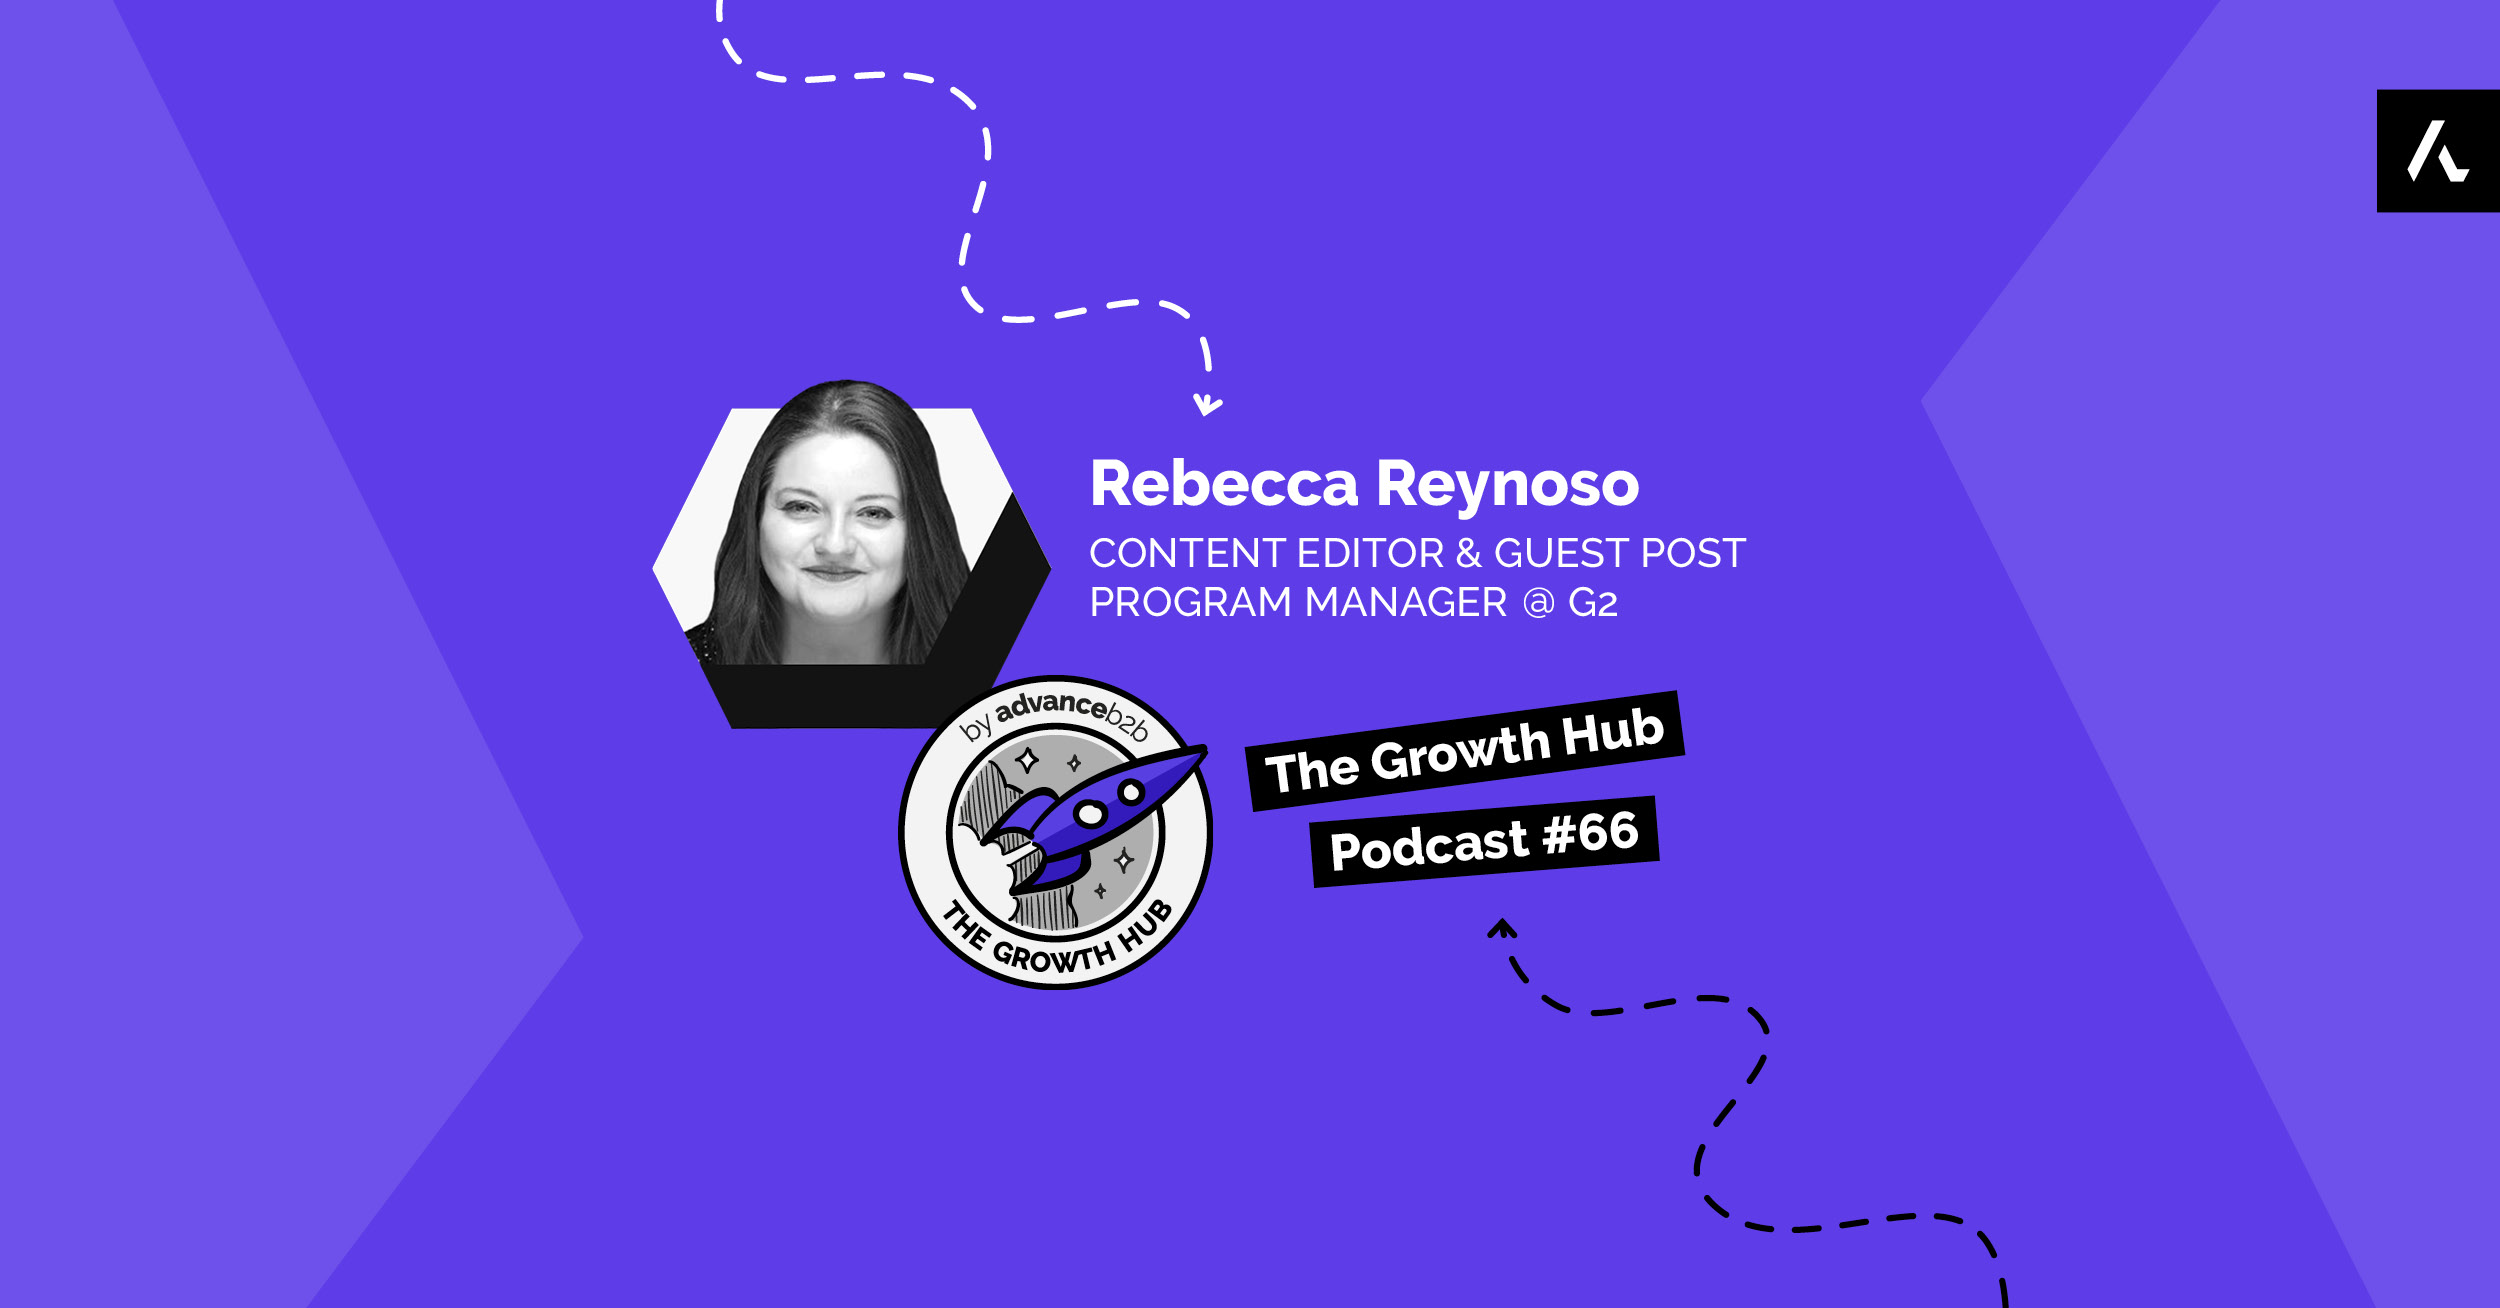 The Growth Hub Podcast - Rebecca Reynoso